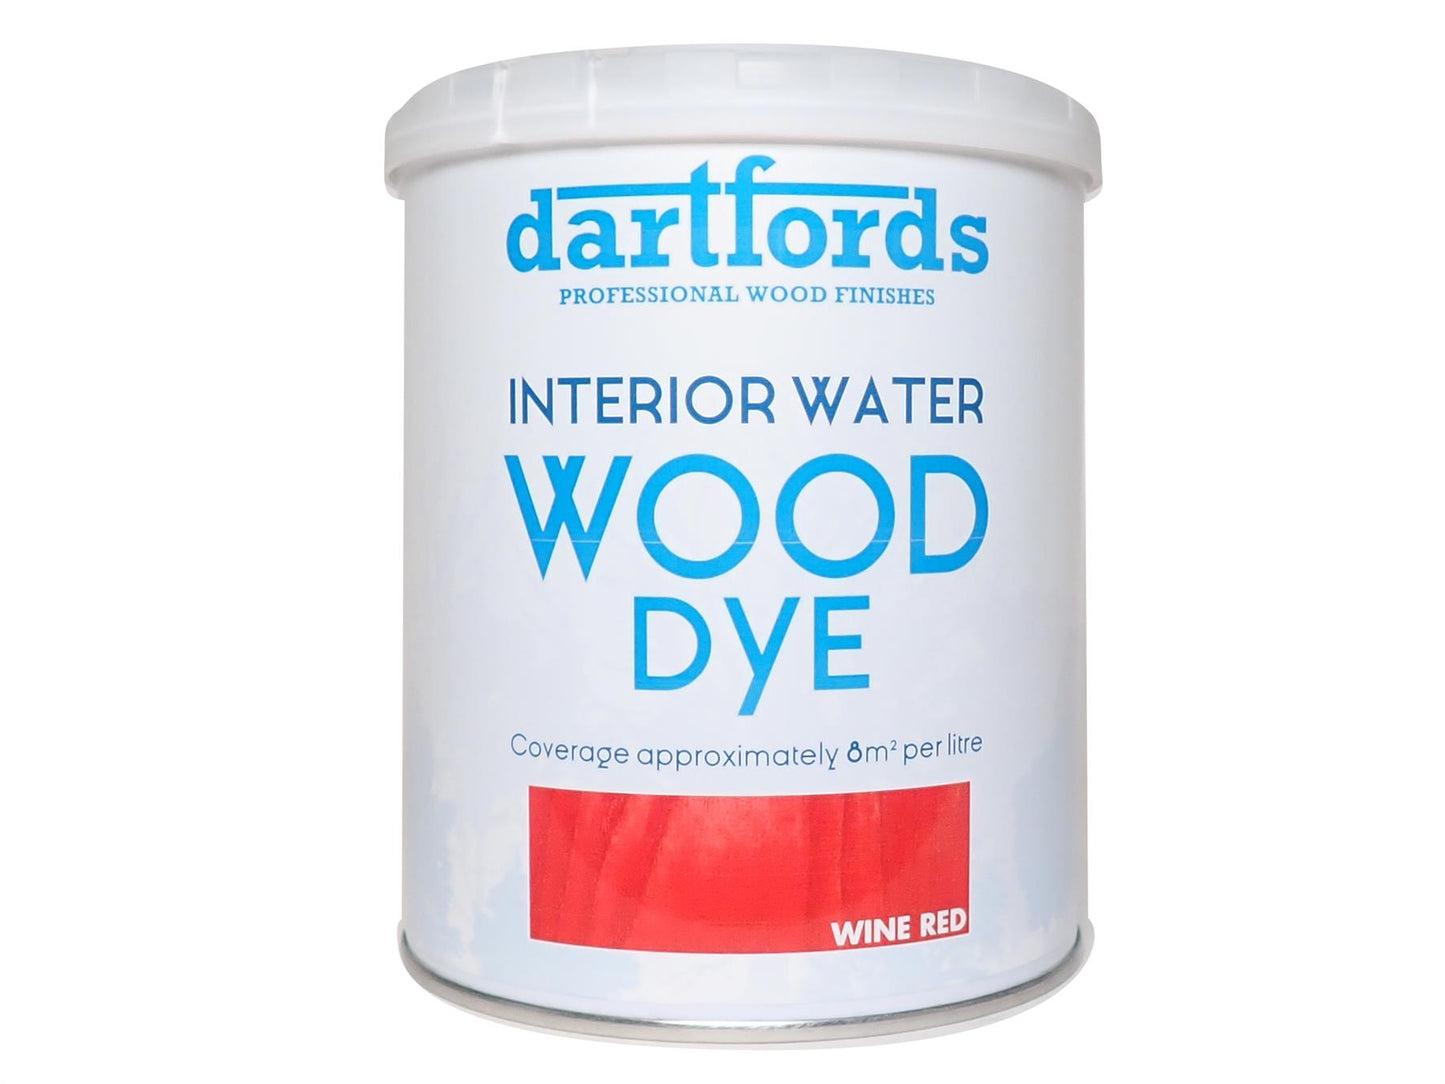 dartfords Wine Red Interior Water Based Wood Dye - 1 litre Tin